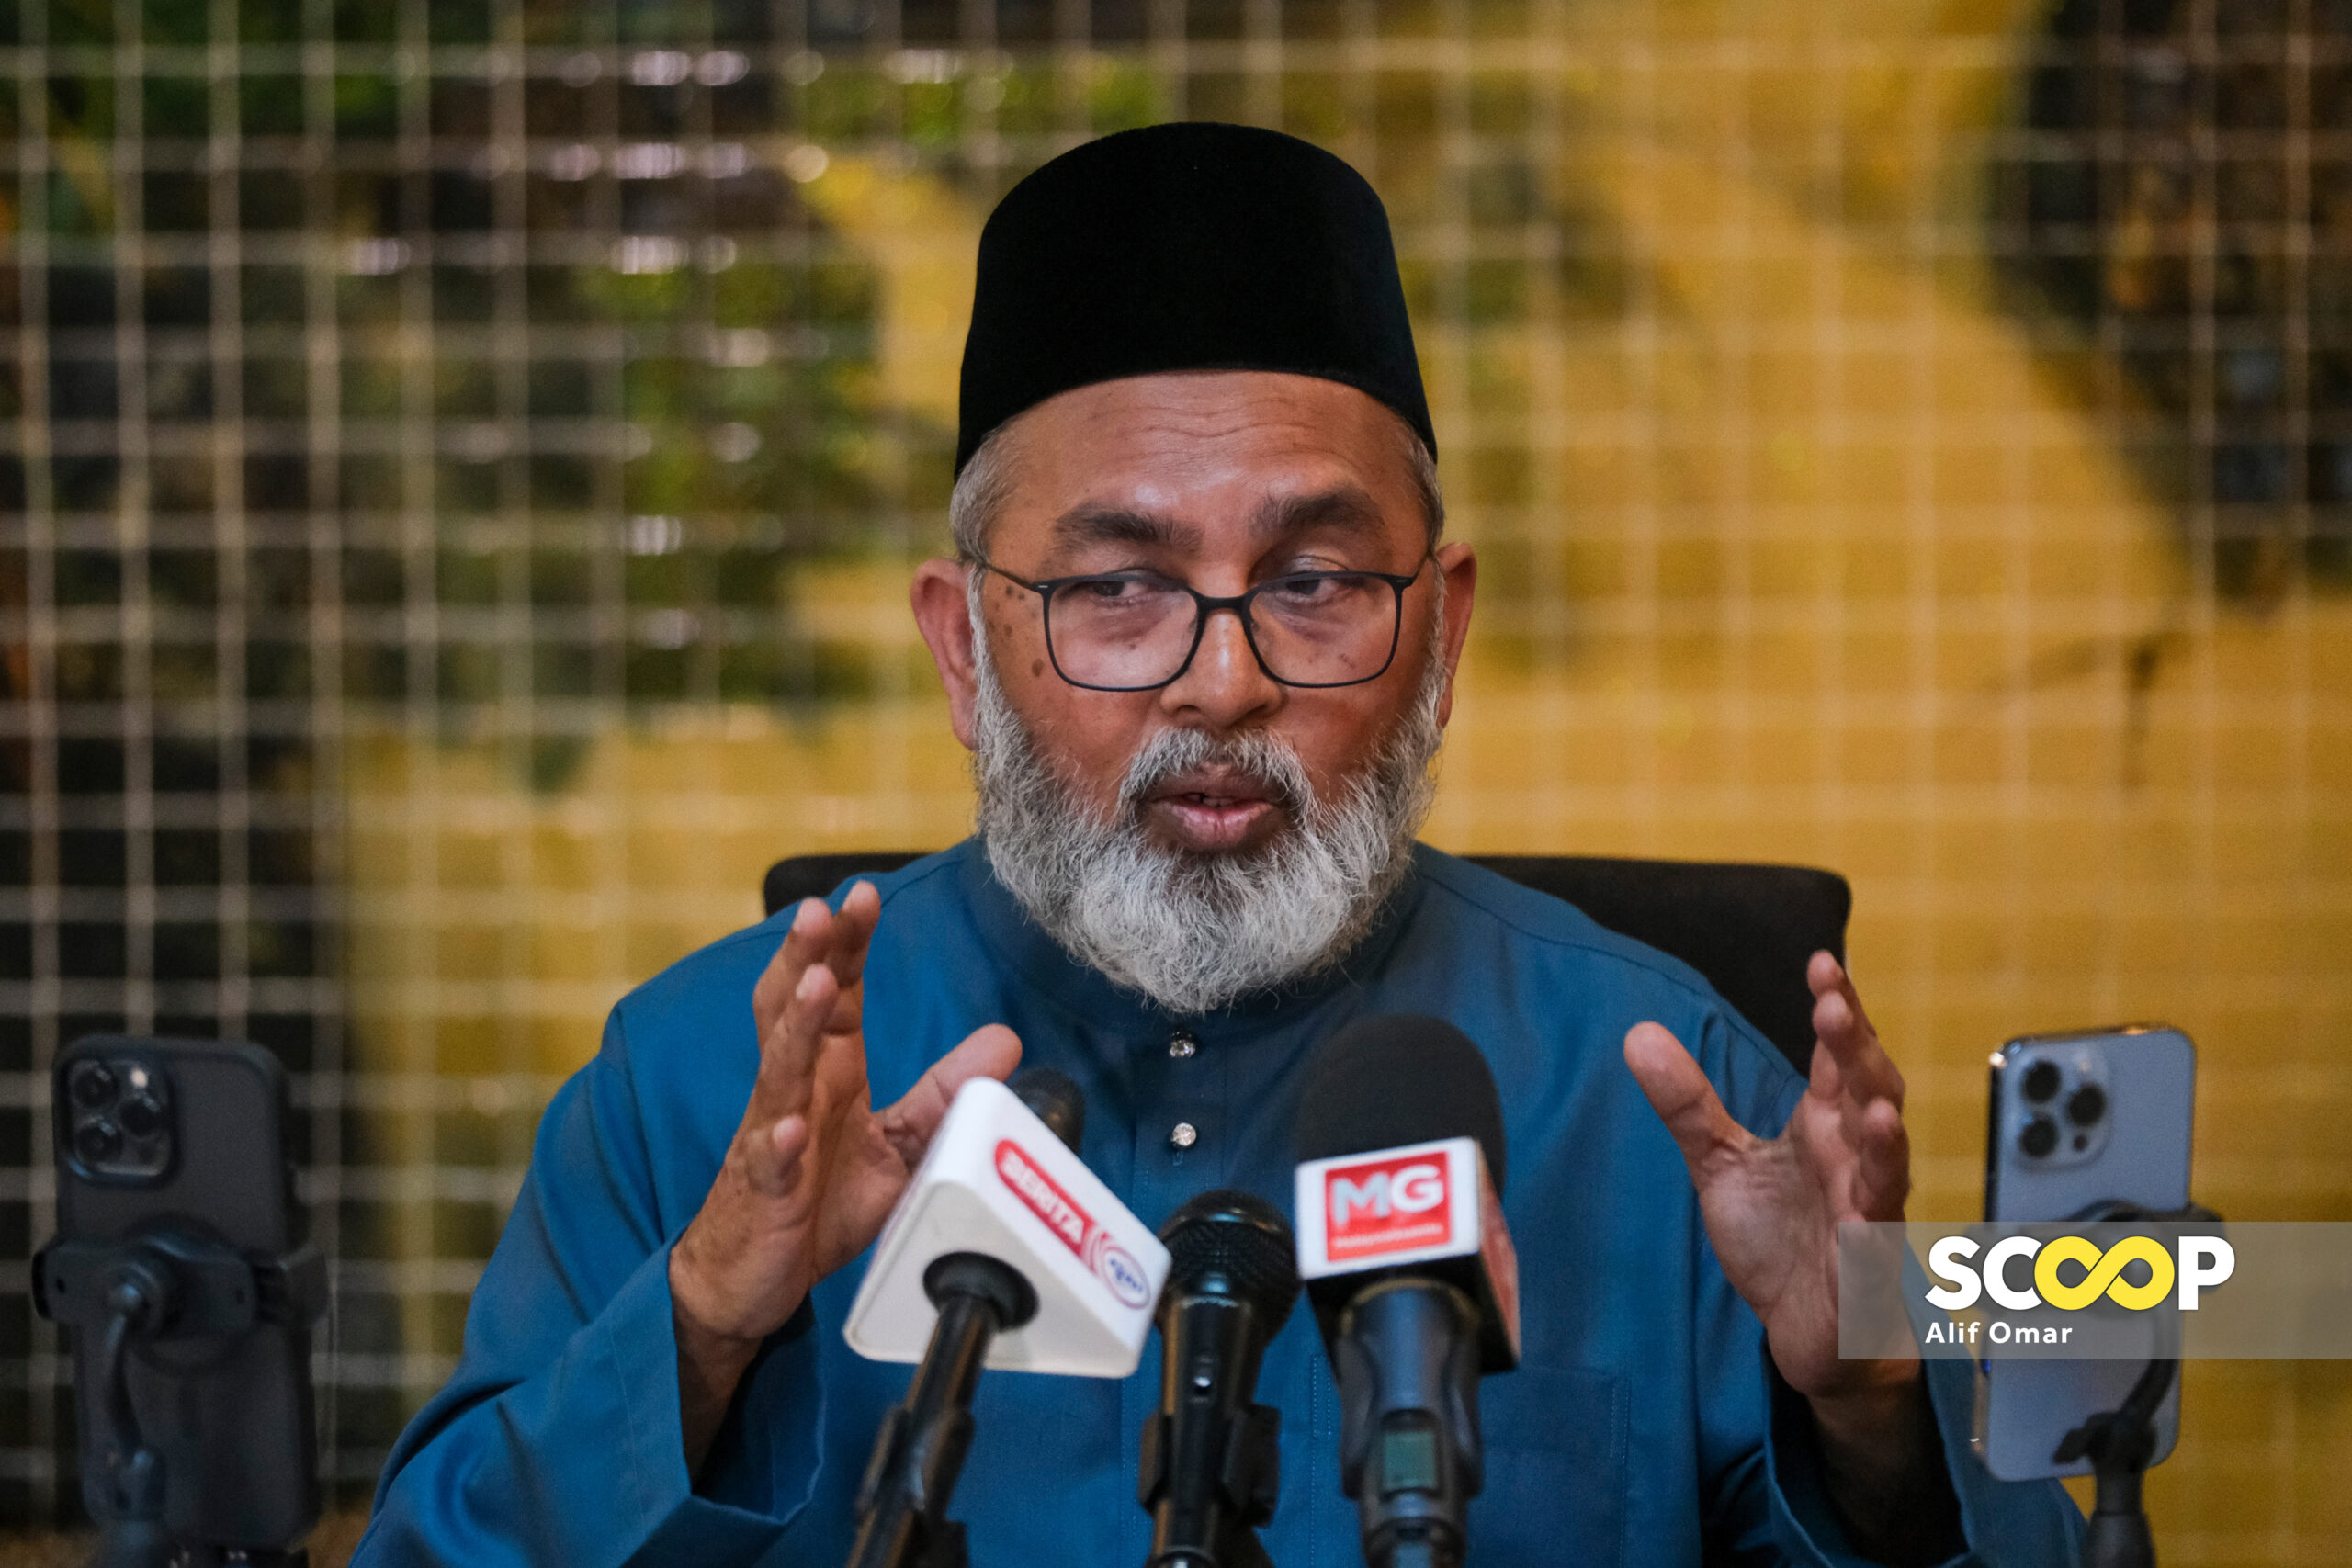 Get a better info chief: Bukit Gantang MP slams Bersatu’s Razali for ‘simplistic’ claims on membership status